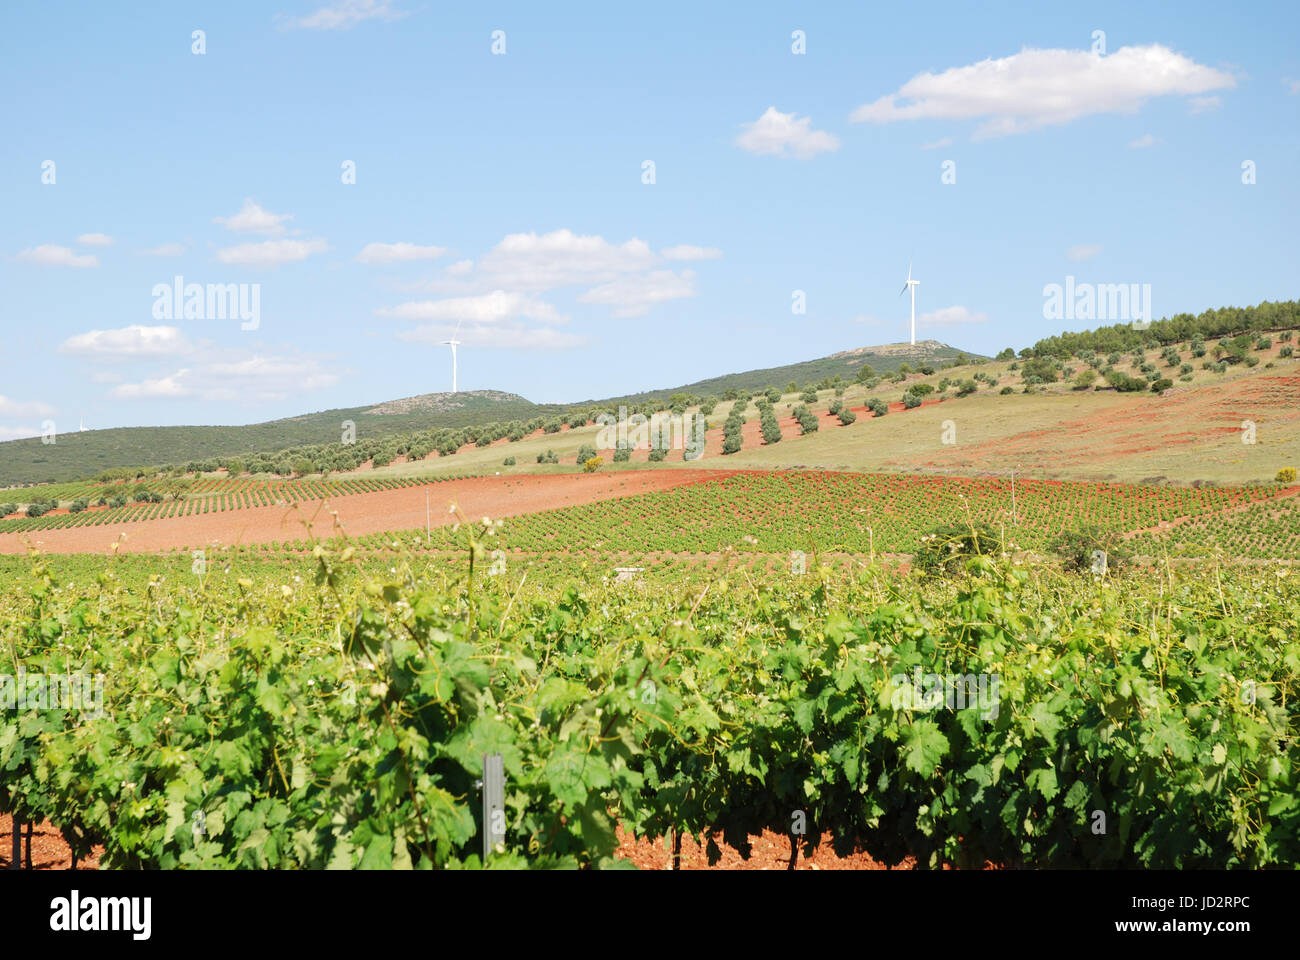 Vineyard and olive groves. Valdepeñas, Ciudad Real province, Castilla La Mancha, Spain. Stock Photo